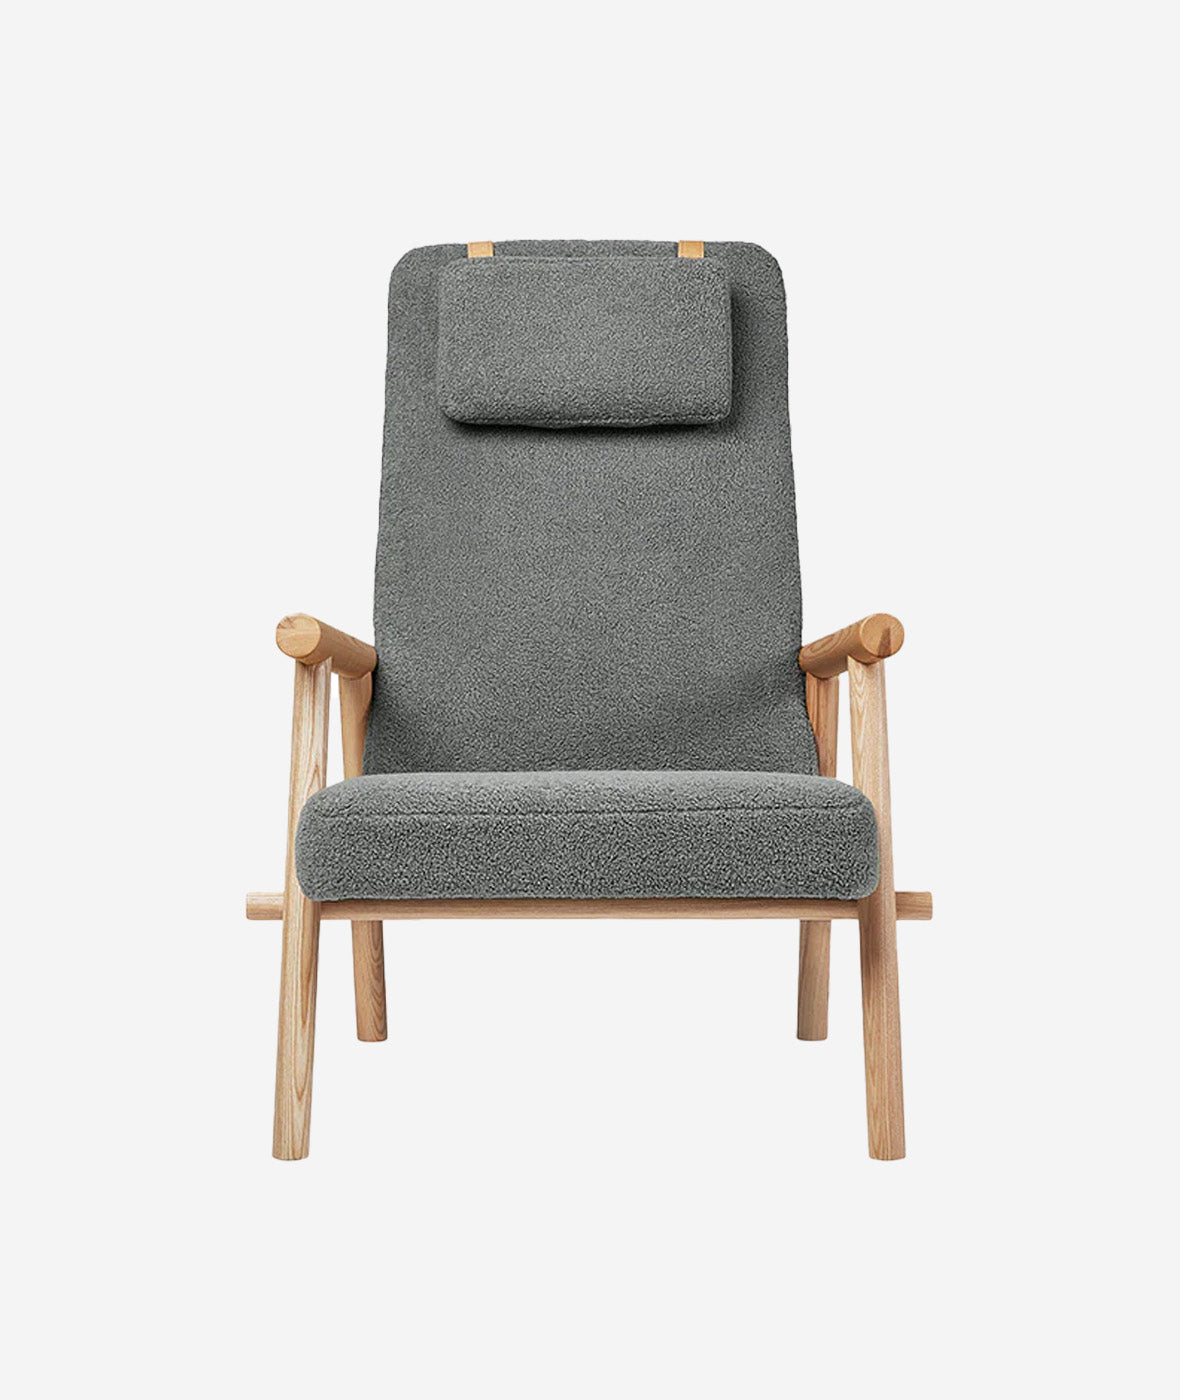 Labrador Chair - More Options